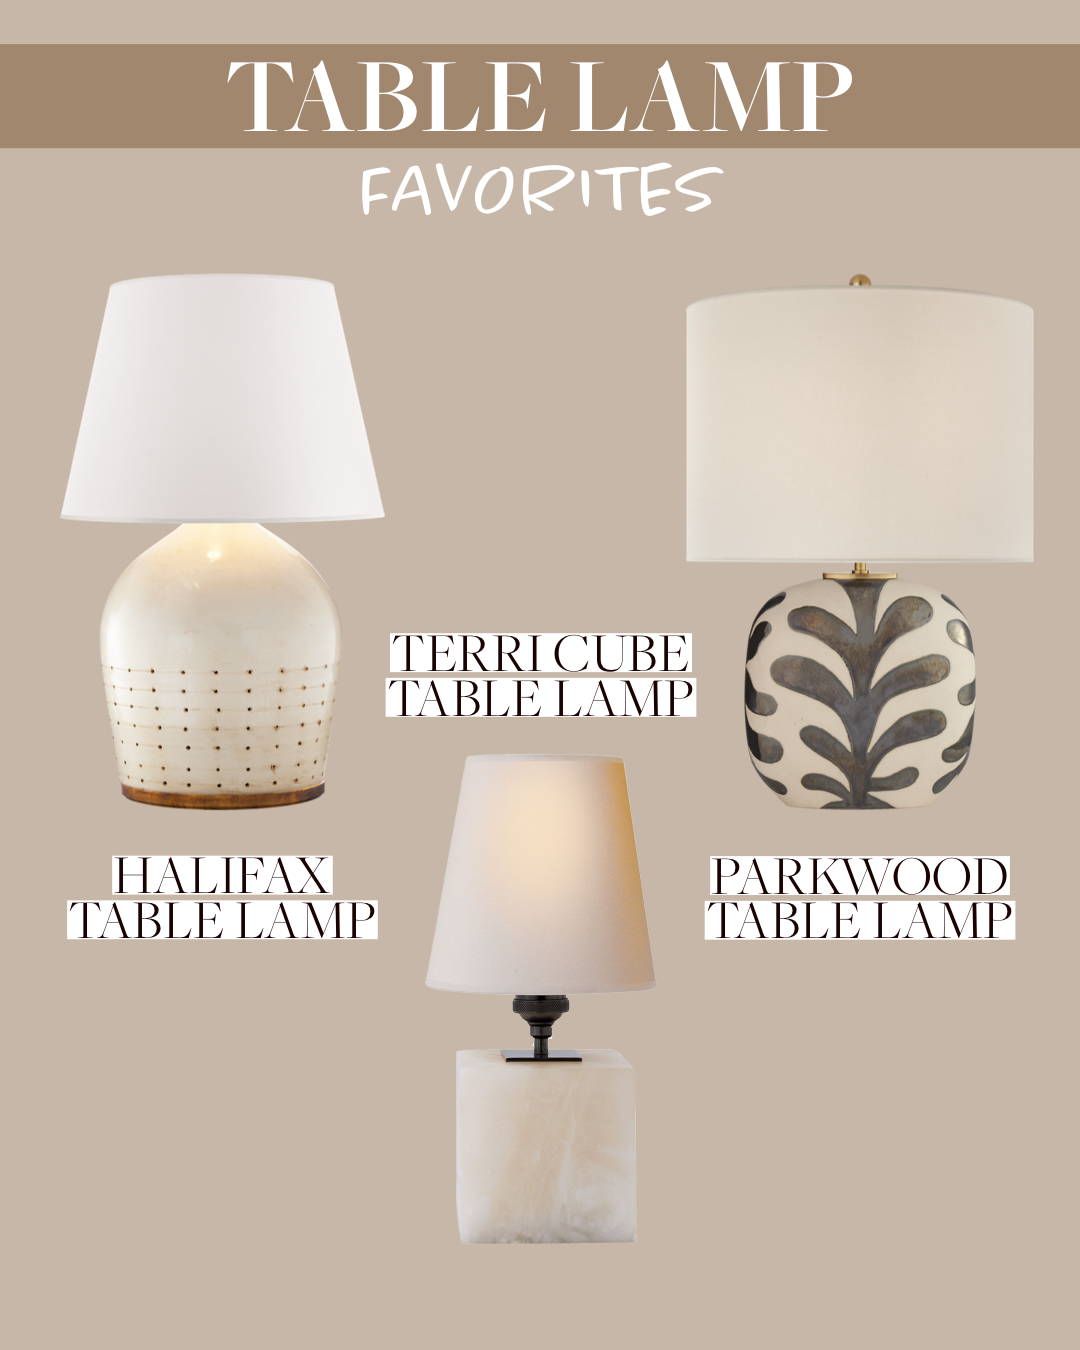 Our Winter Lighting Favorites English, Parkwood Medium Table Lamp